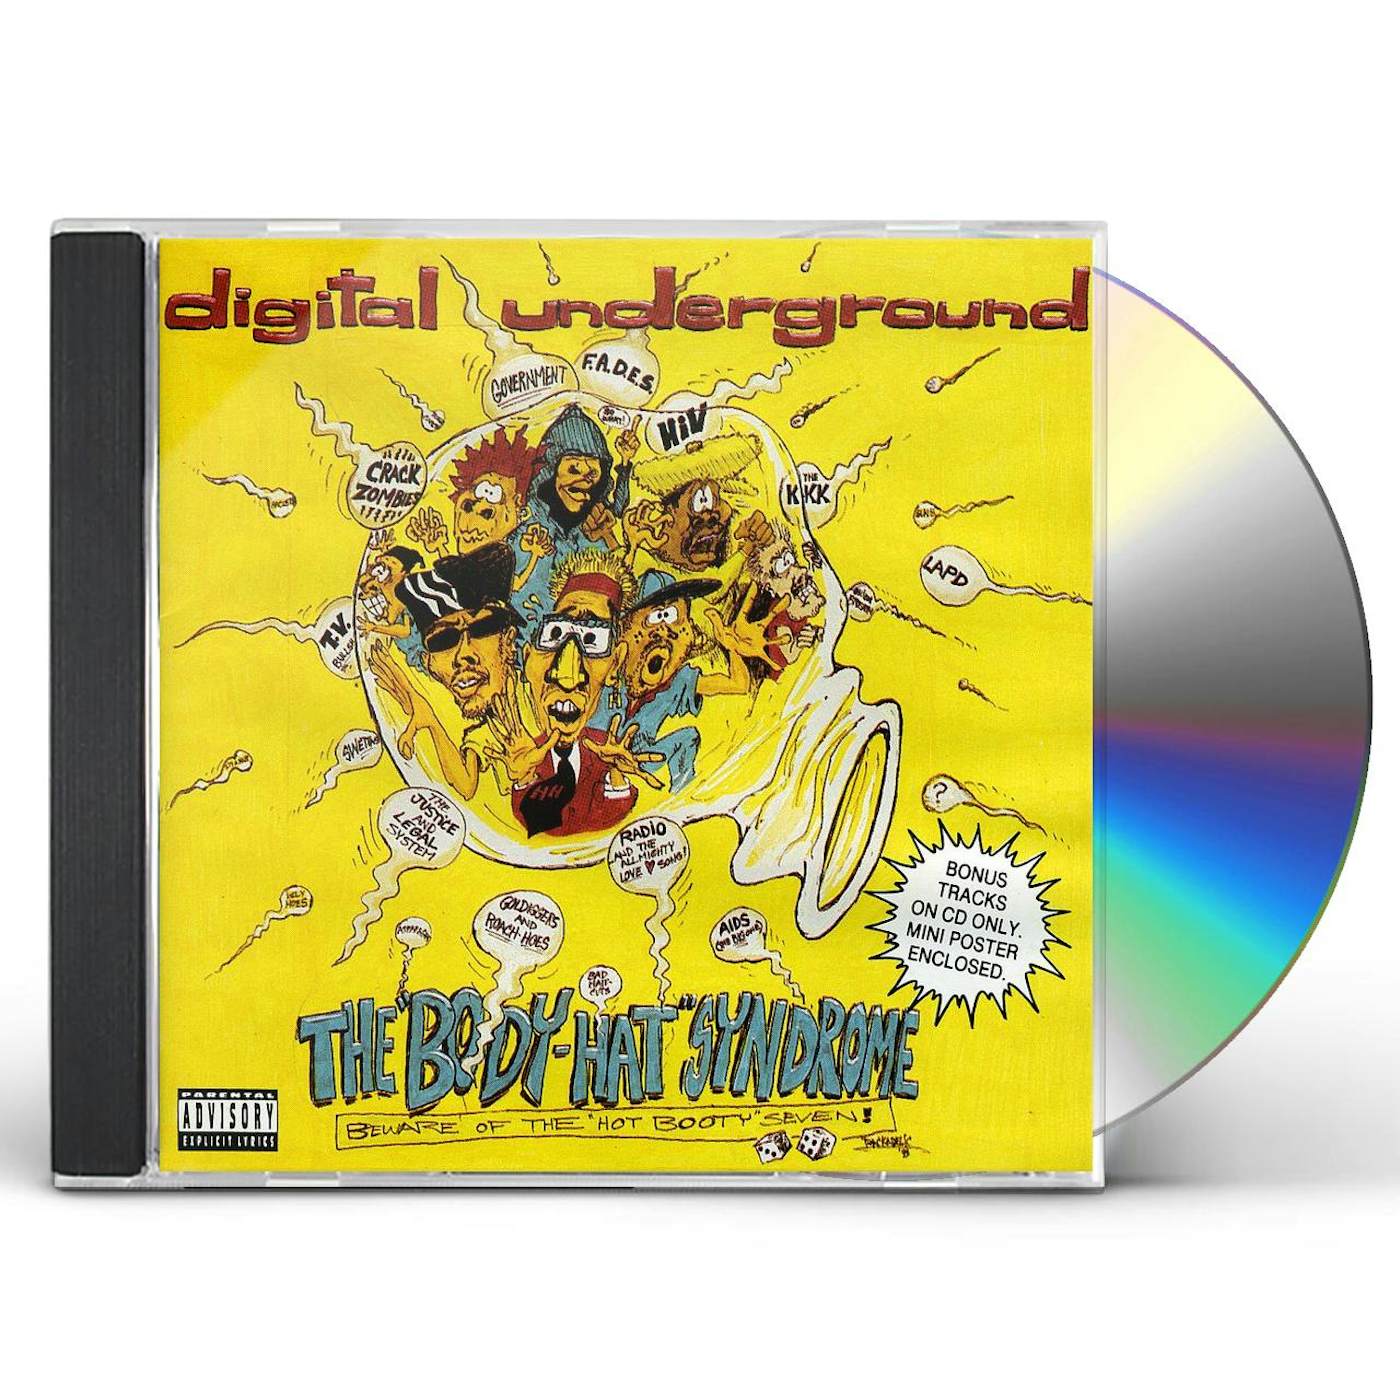 Digital Underground BODY HAT SYNDROME CD